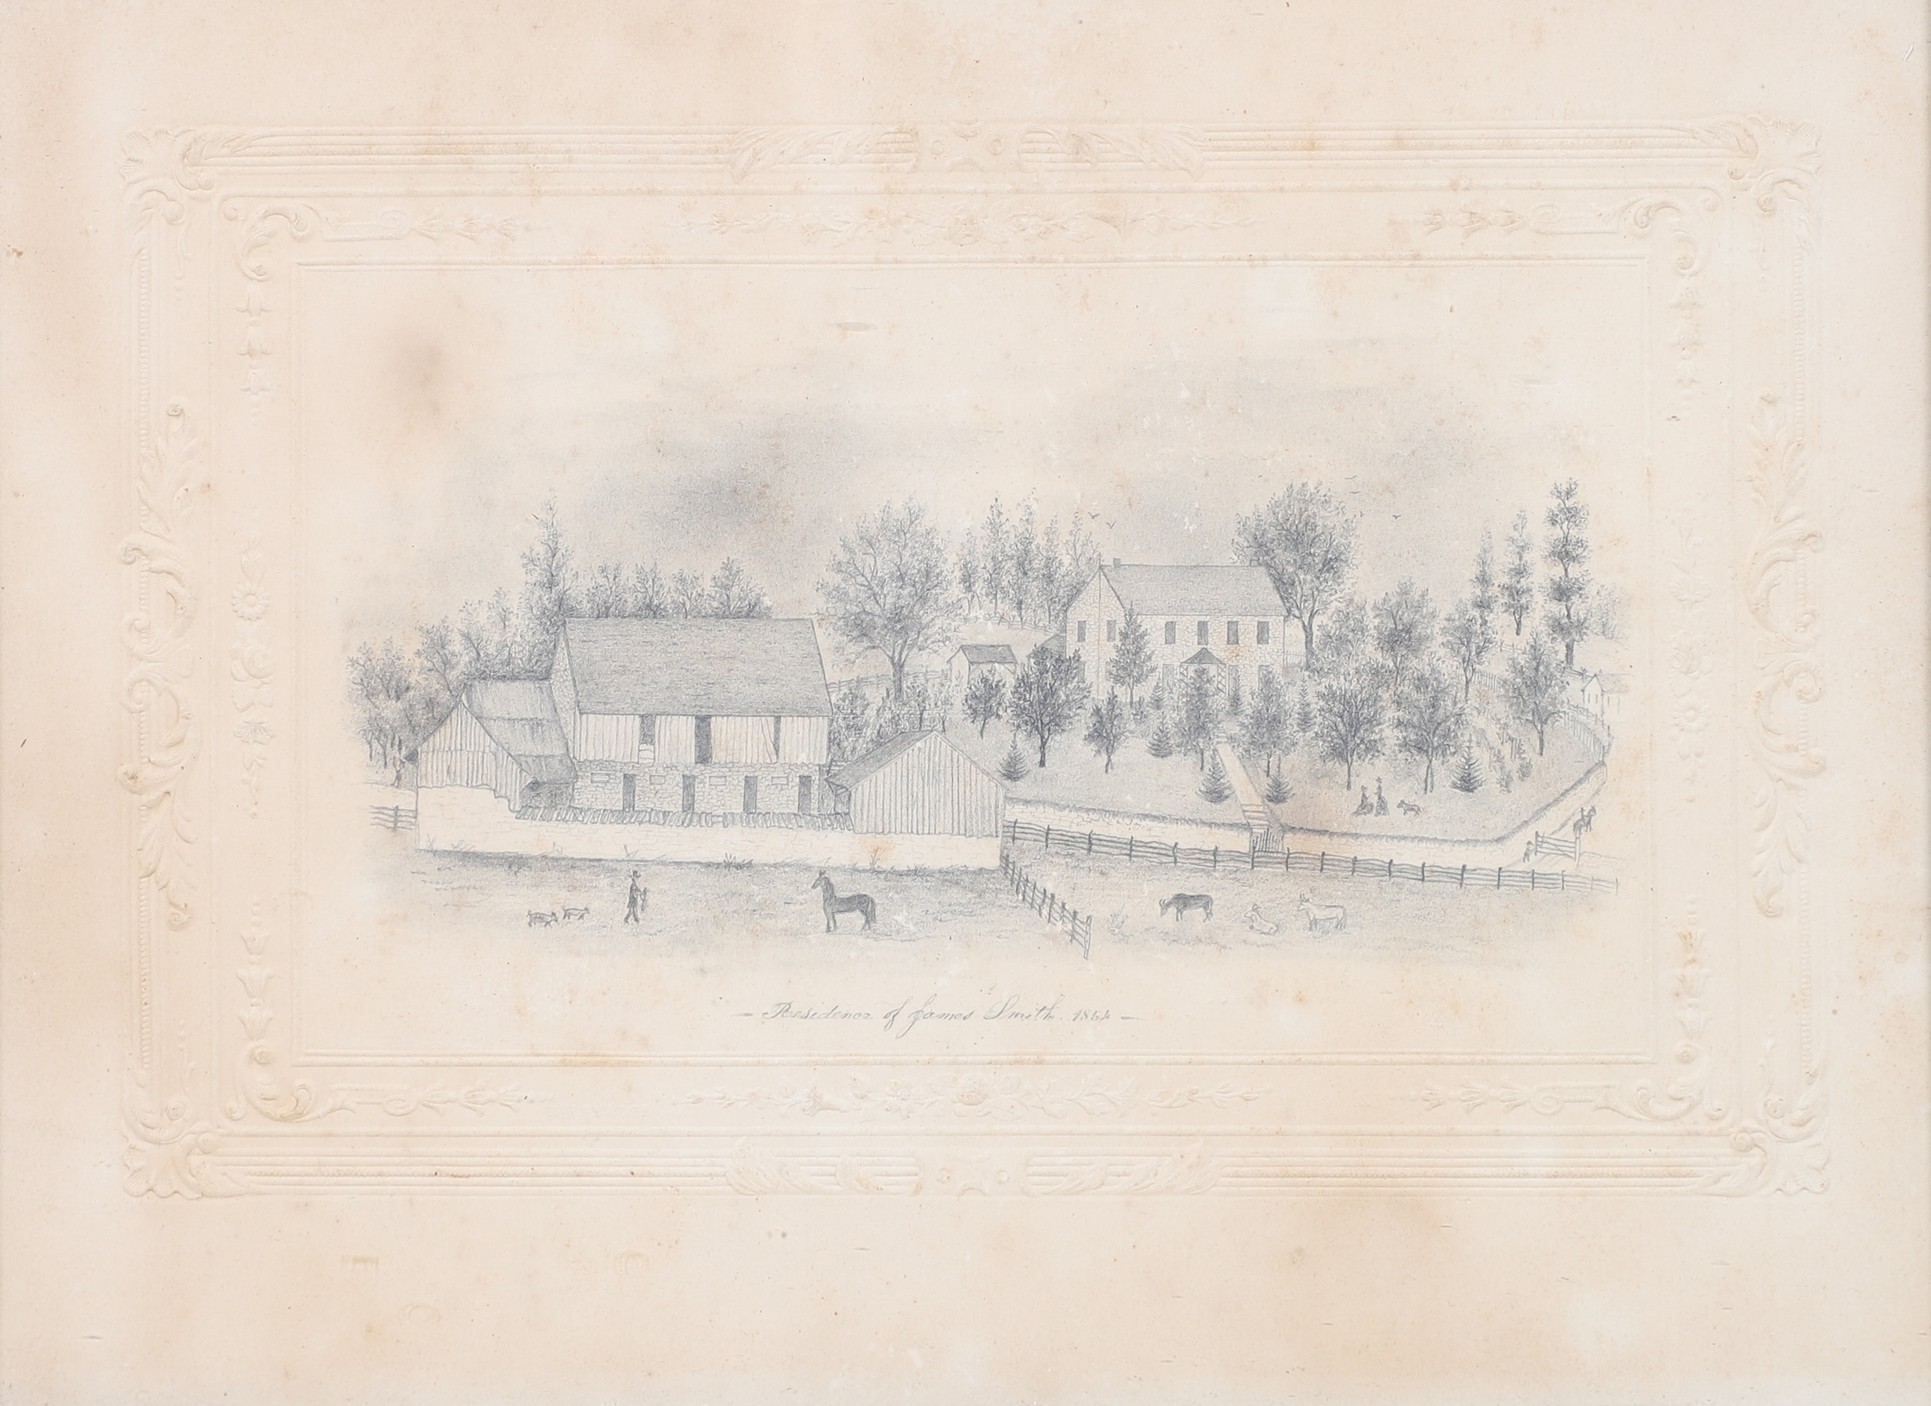 1854 American Folk Art Sketch of